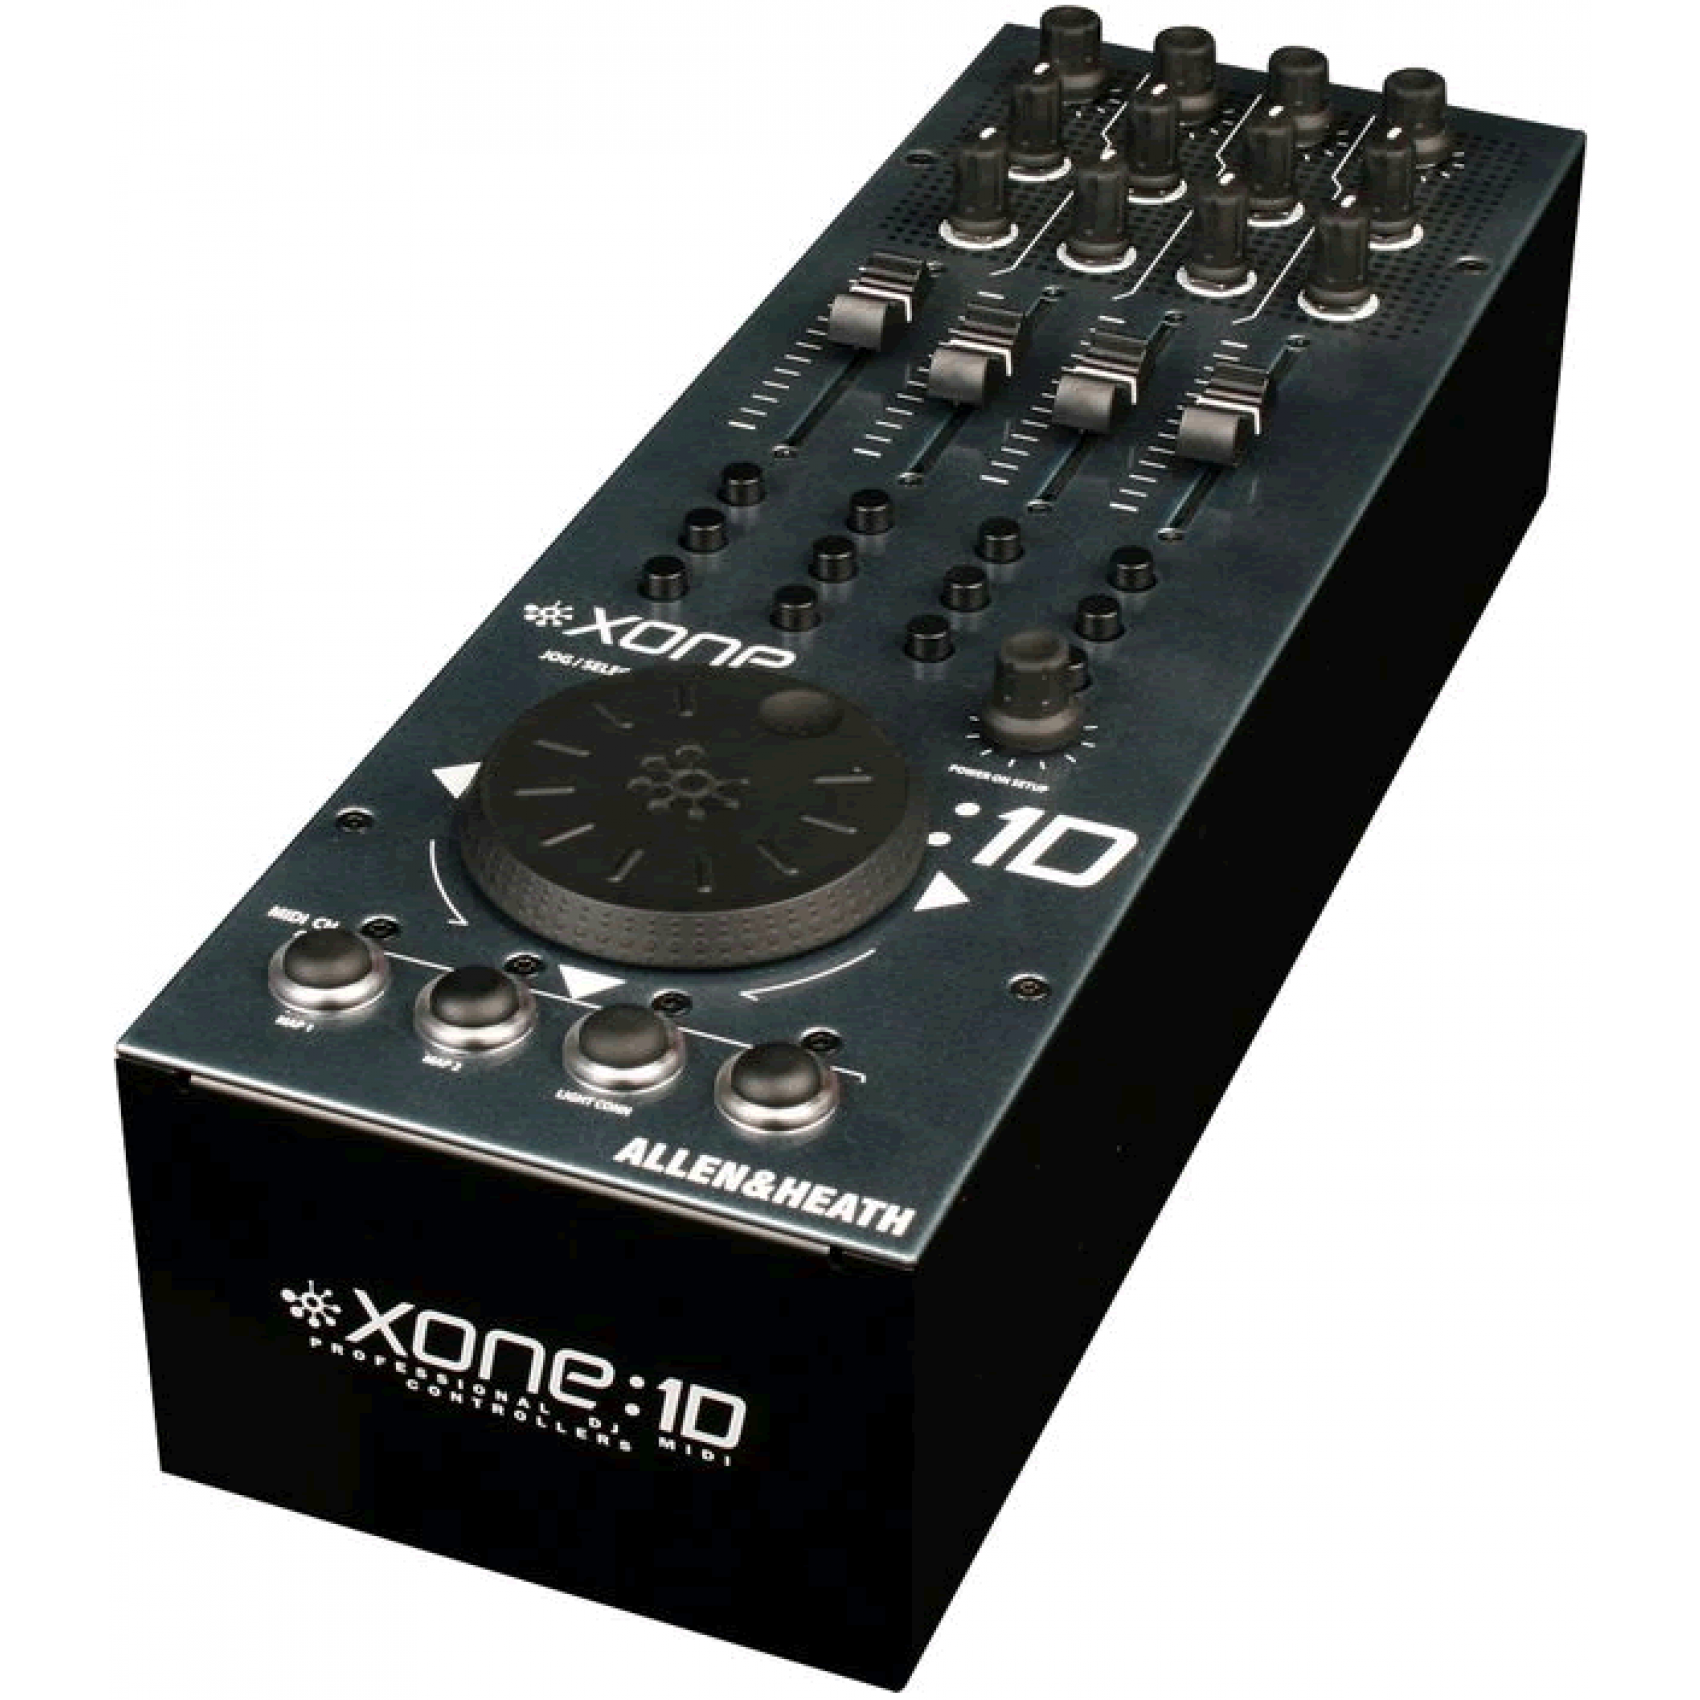 ALLEN & HEATH XONE 1D - CONTROLLER MIDI PER DJ